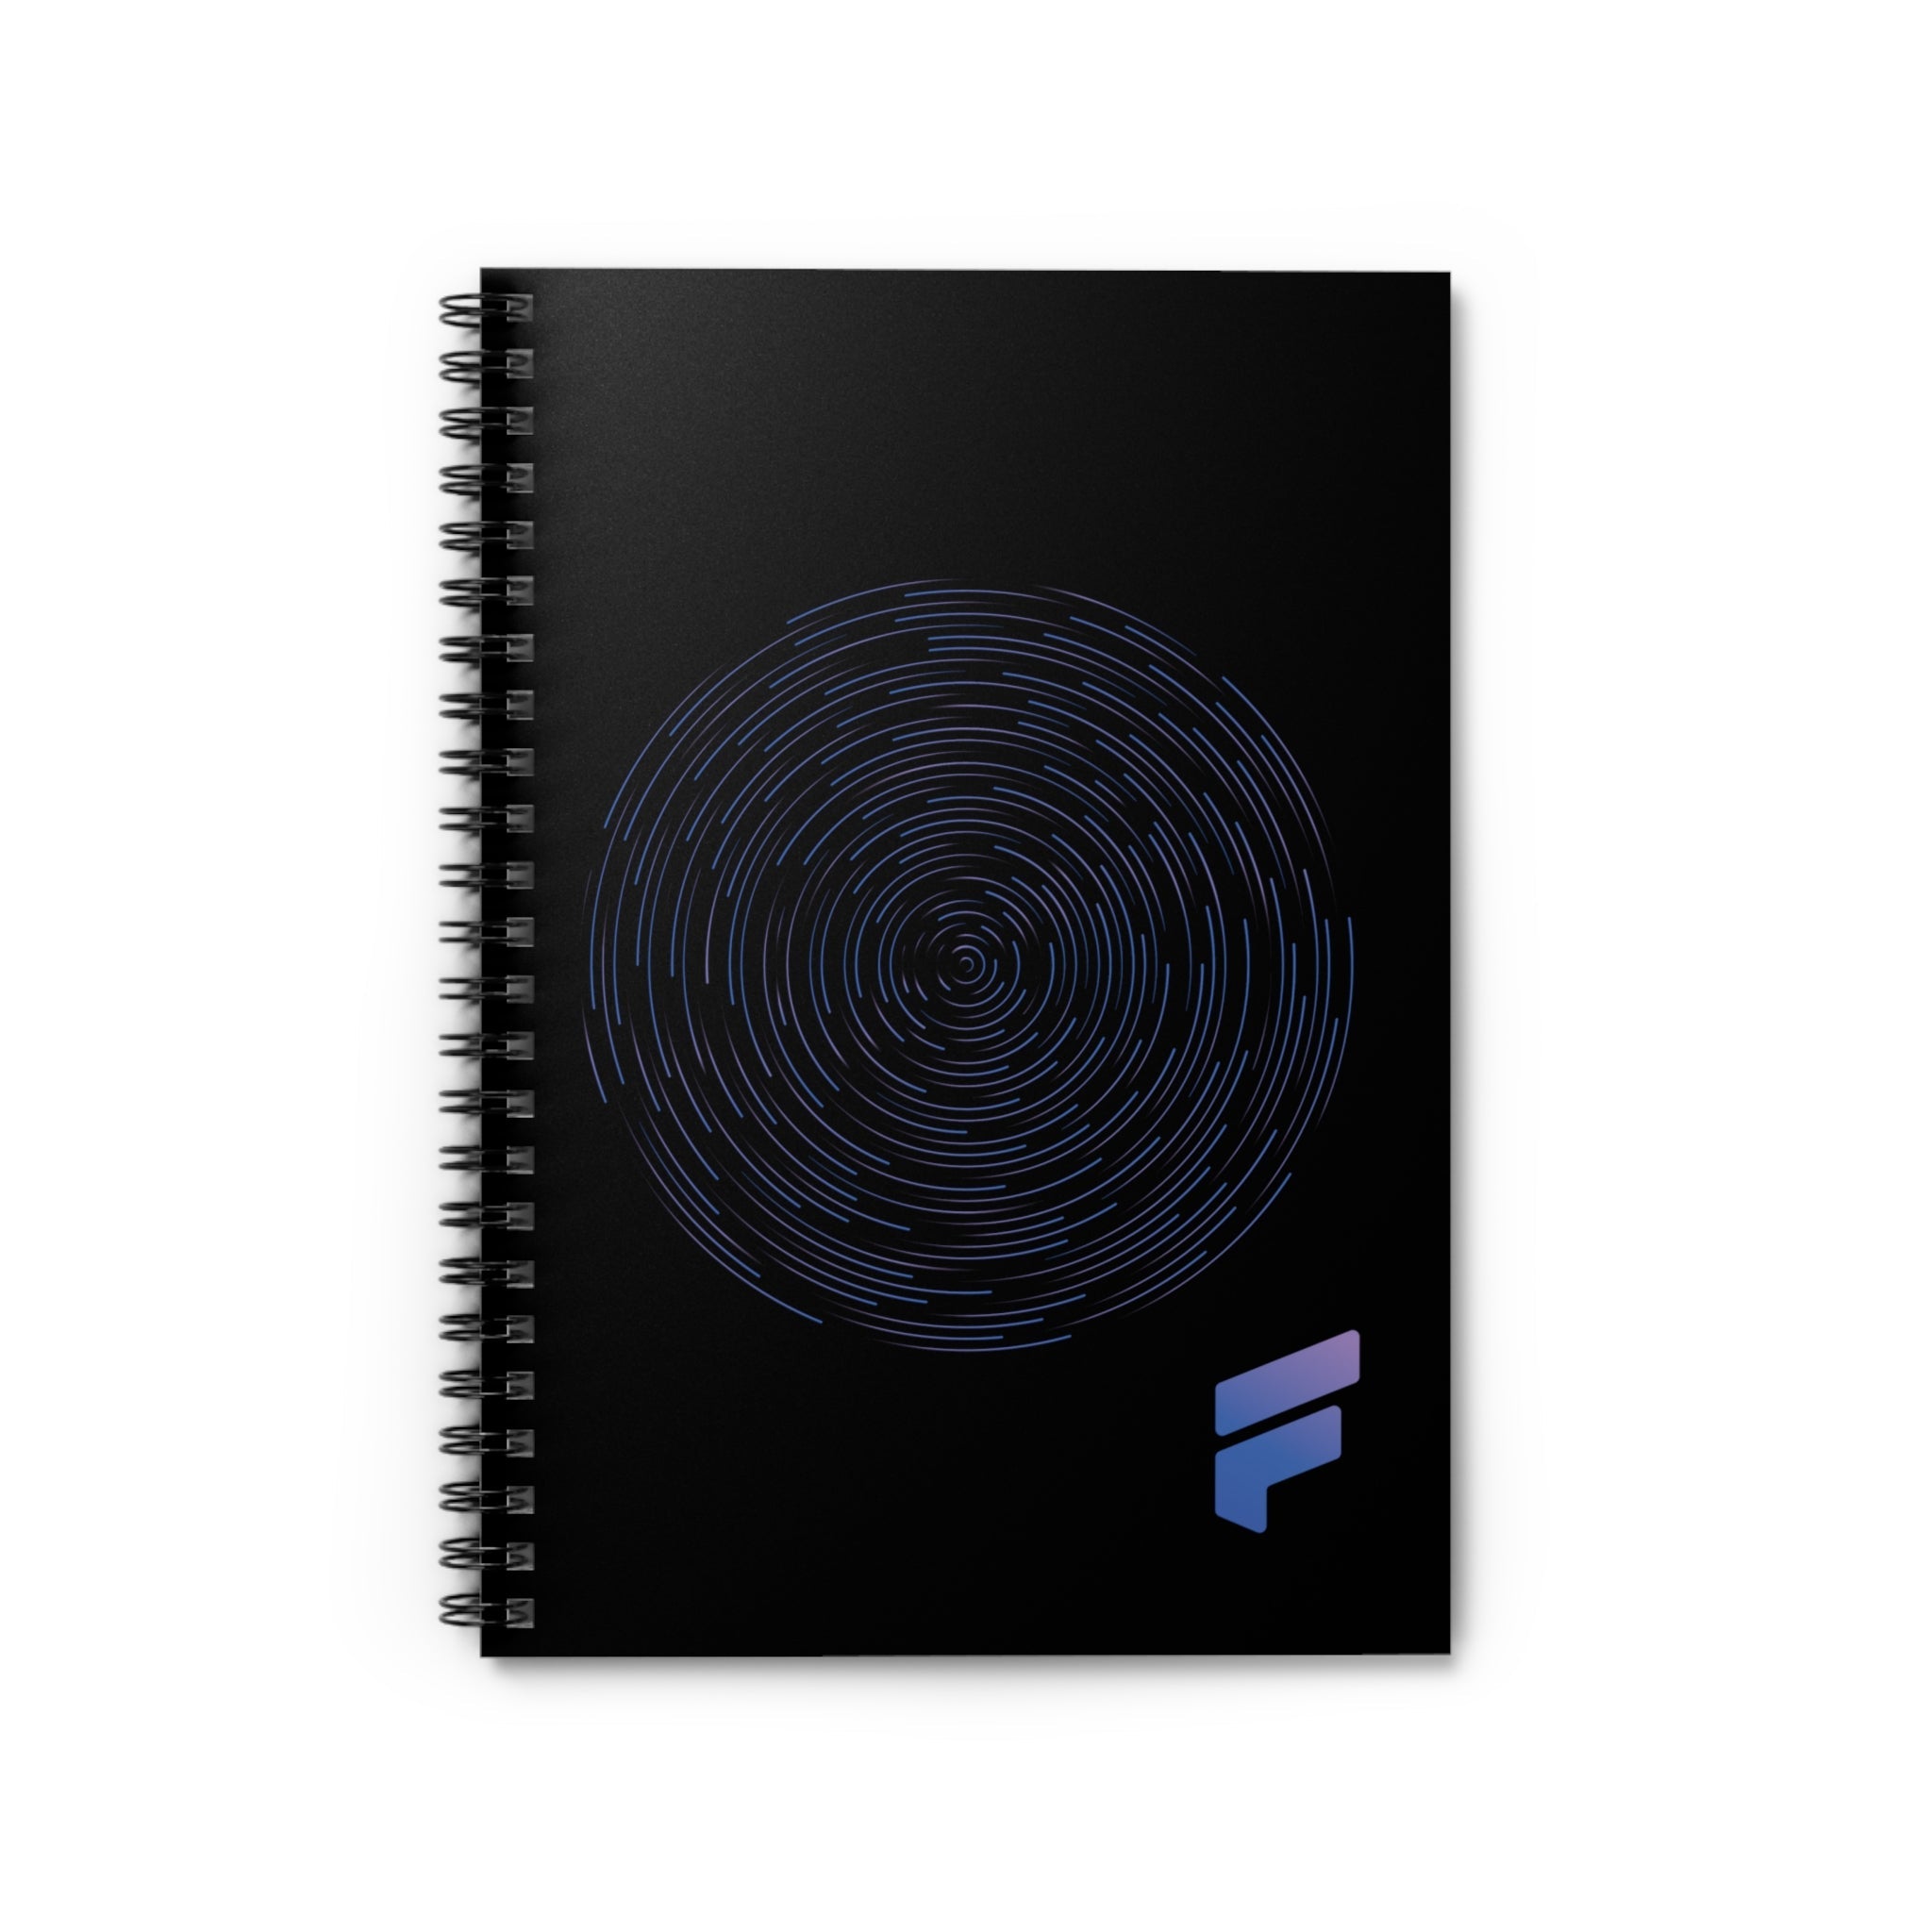 Flywheel Spiral Notebook - Ruled Line - DSP On Demand